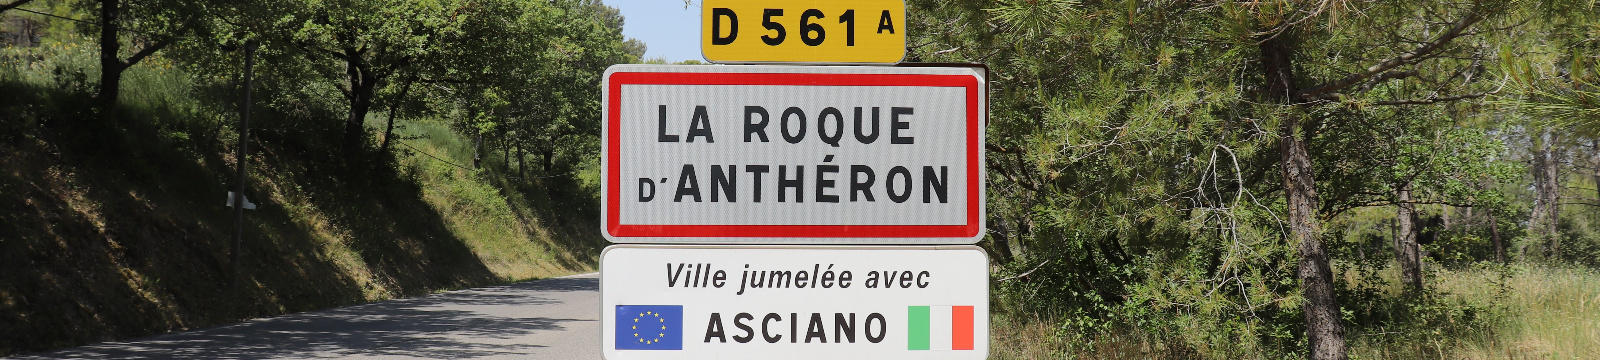 How to get to La Roque d’Anthéron ?